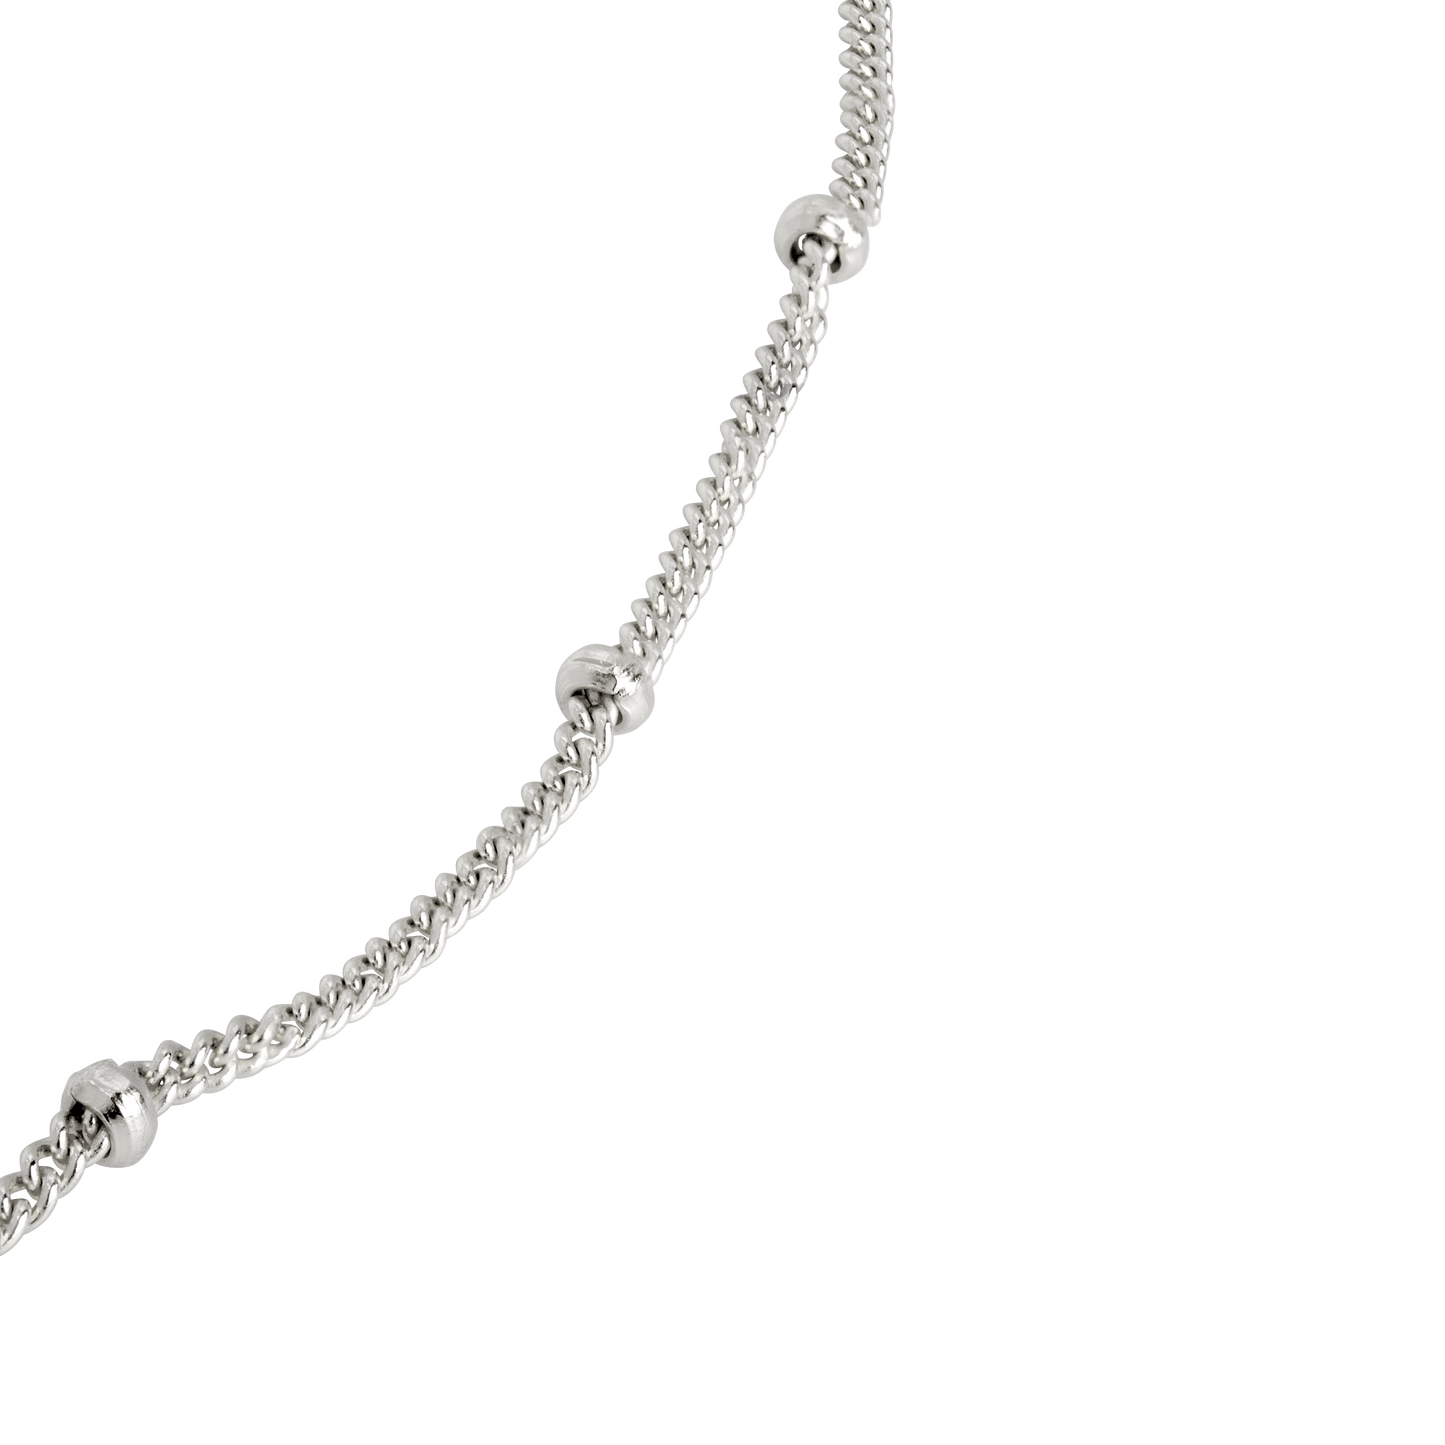 Beads Bracelet Silver